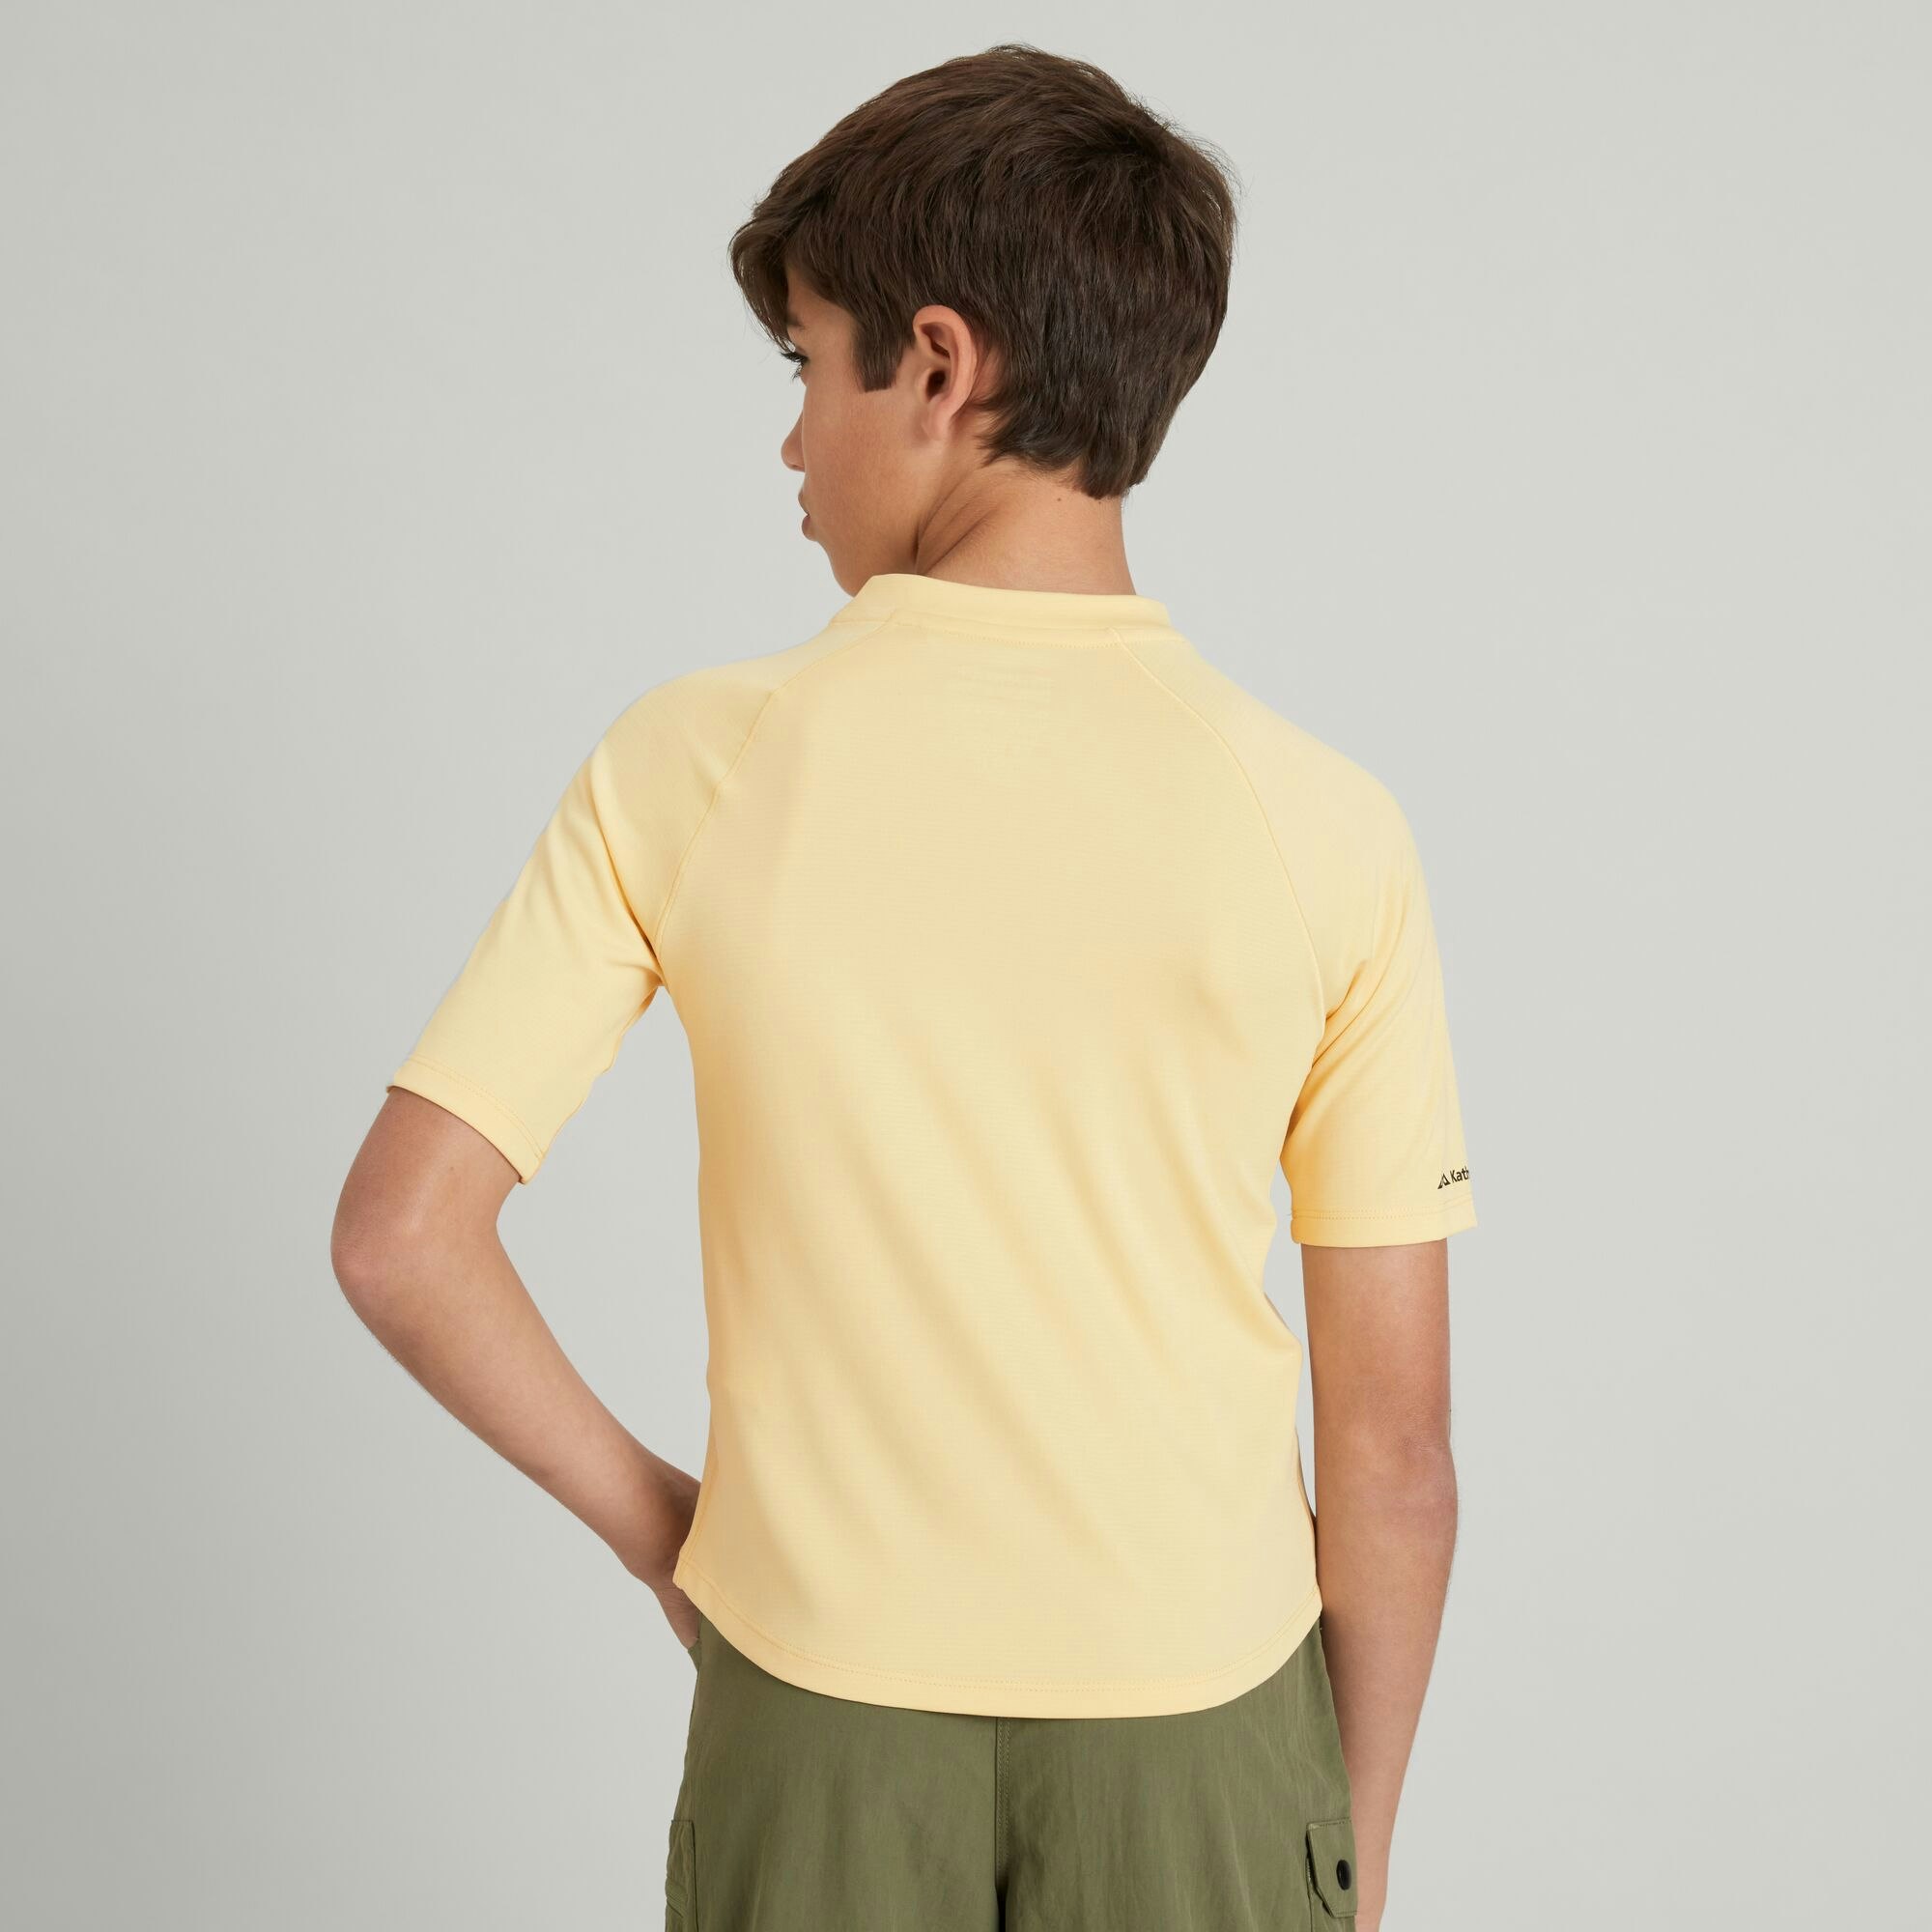 Arshiner Boys Cotton T Shirt Short Sleeve Undershirt 